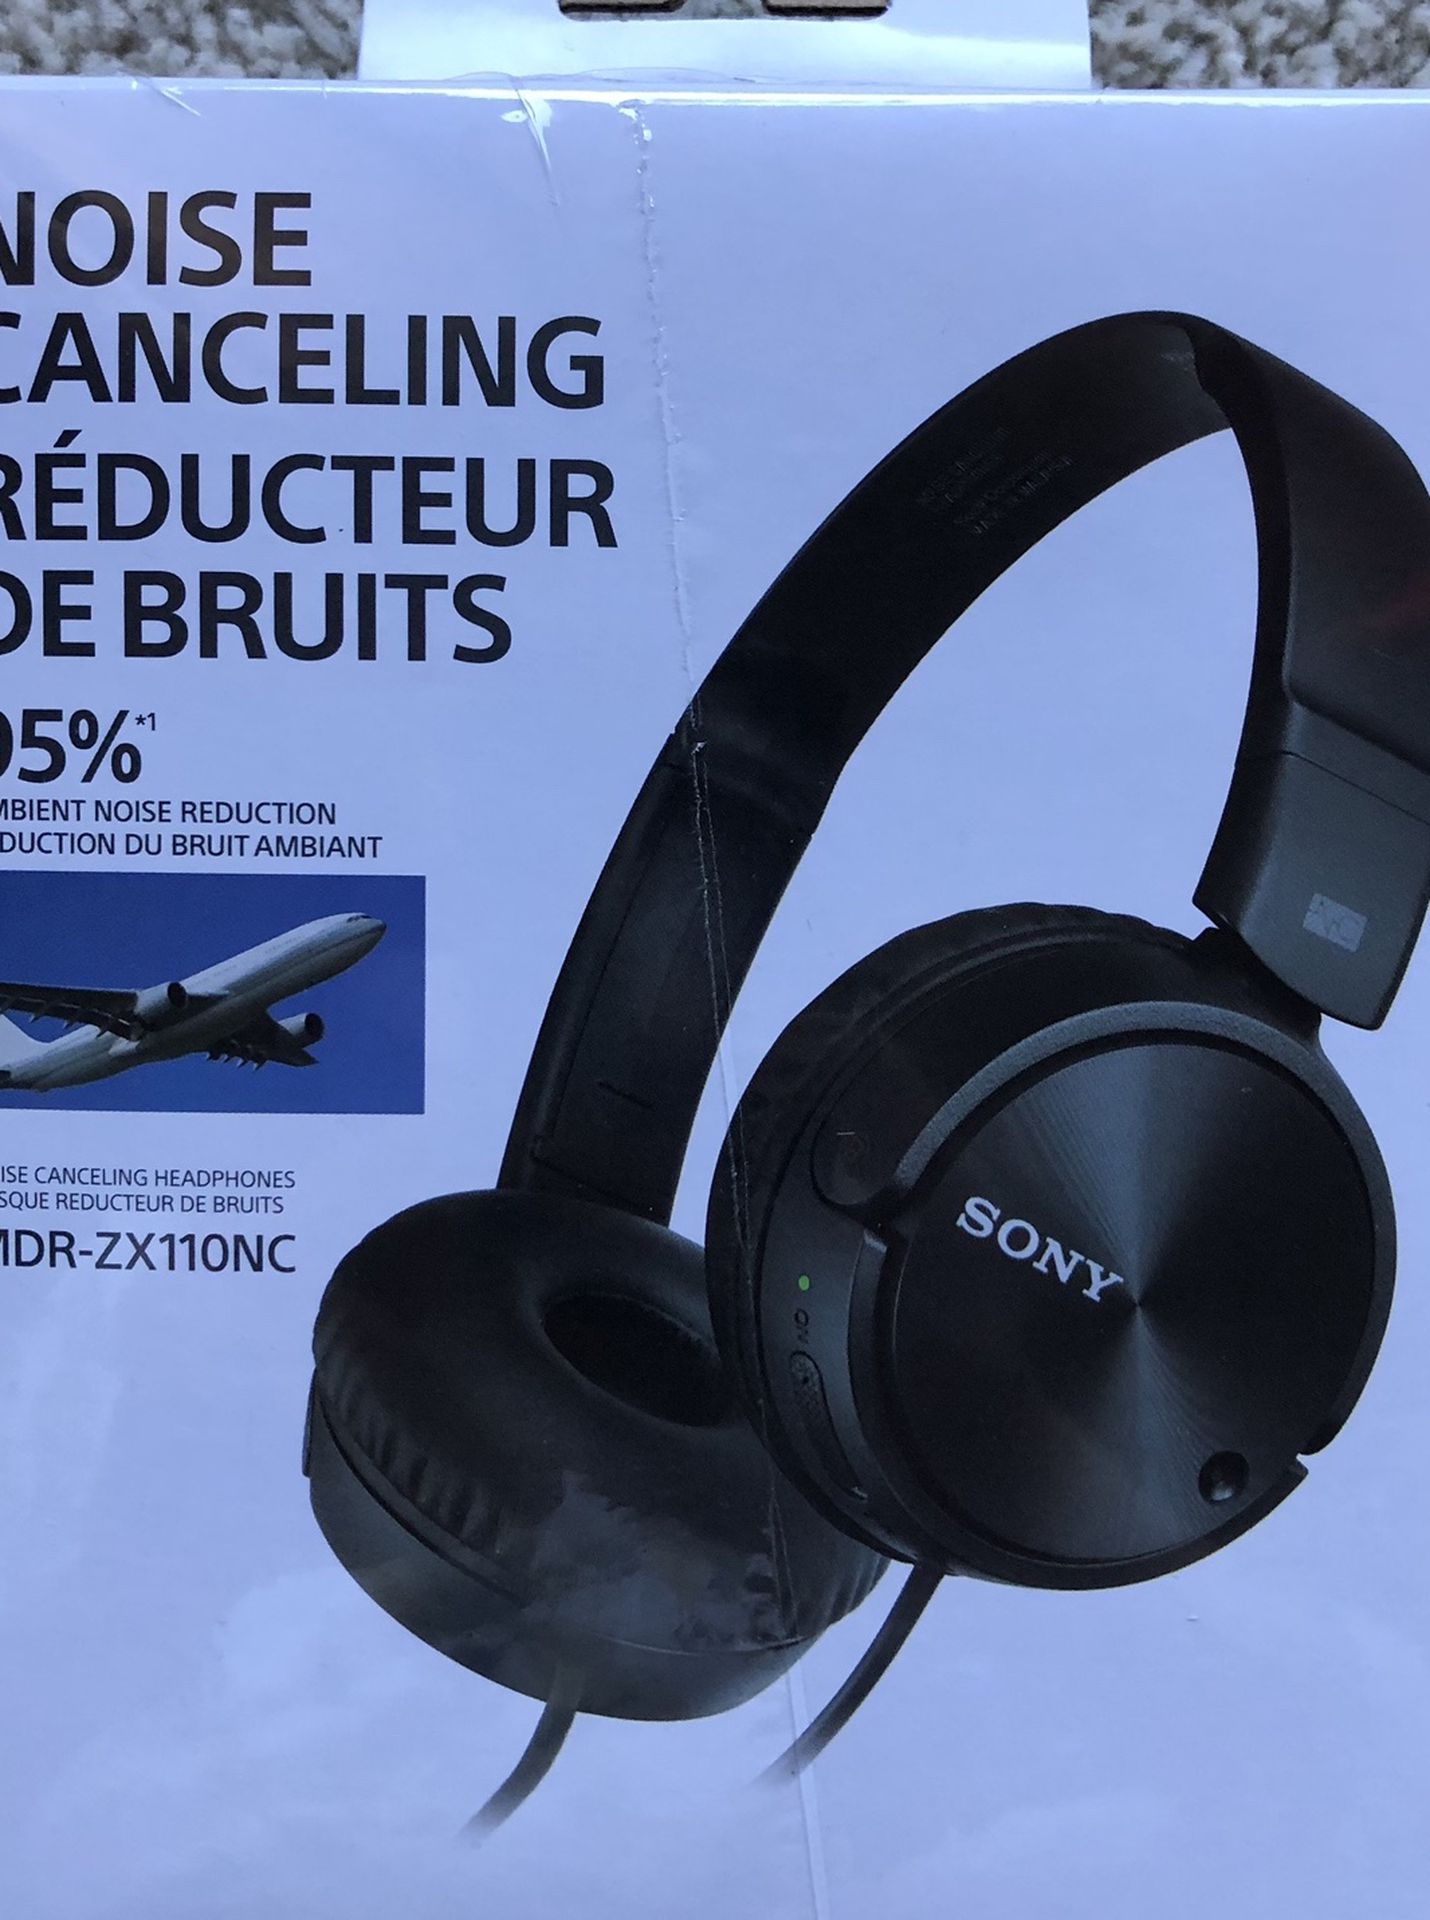 Brand new Sony noise canceling headphones